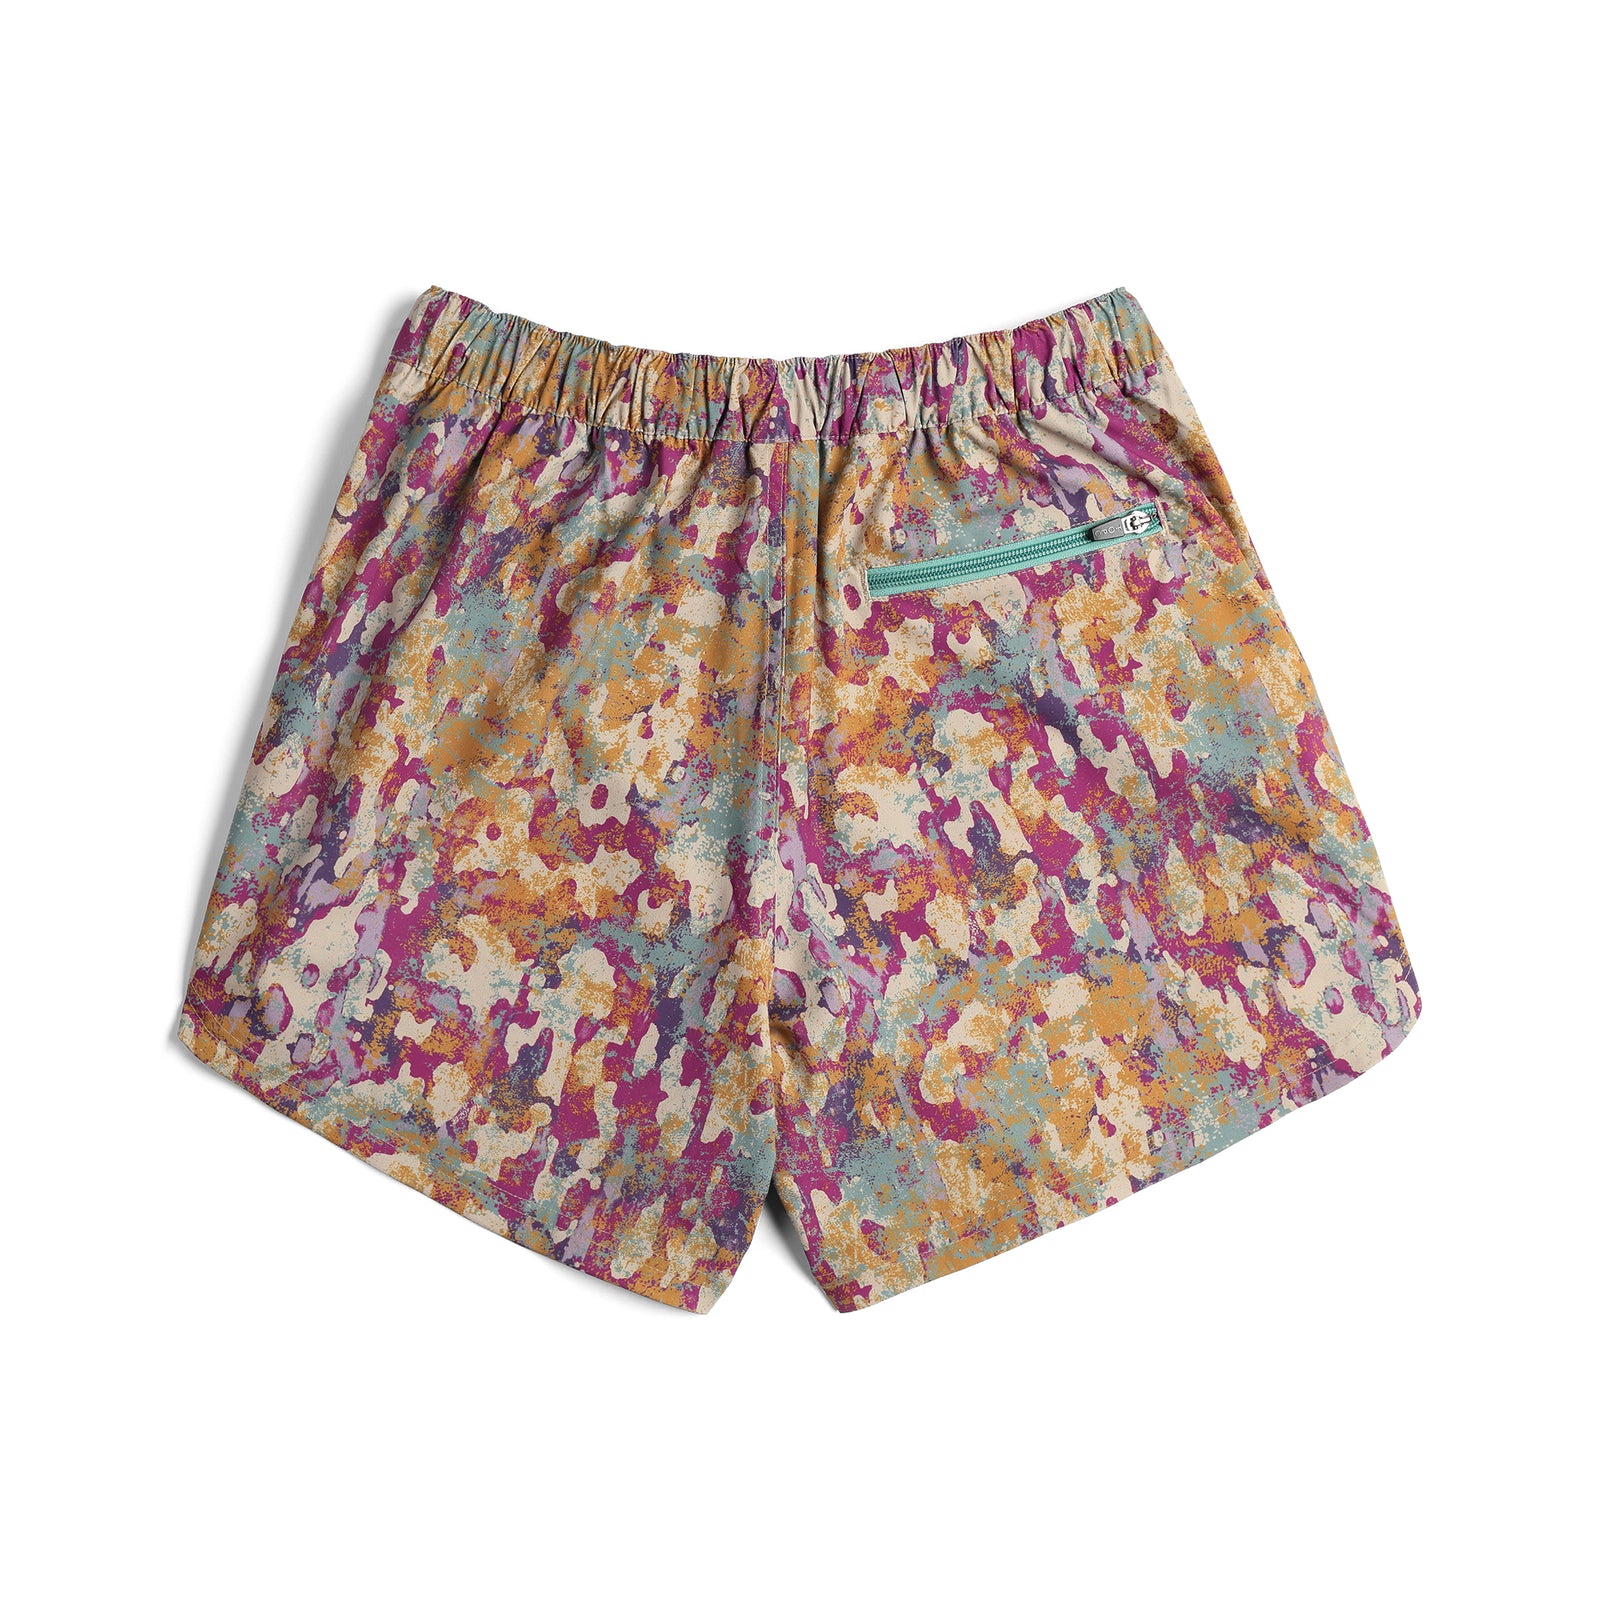 Back View of Topo Designs River Shorts - Women's in "Khaki Celestial"